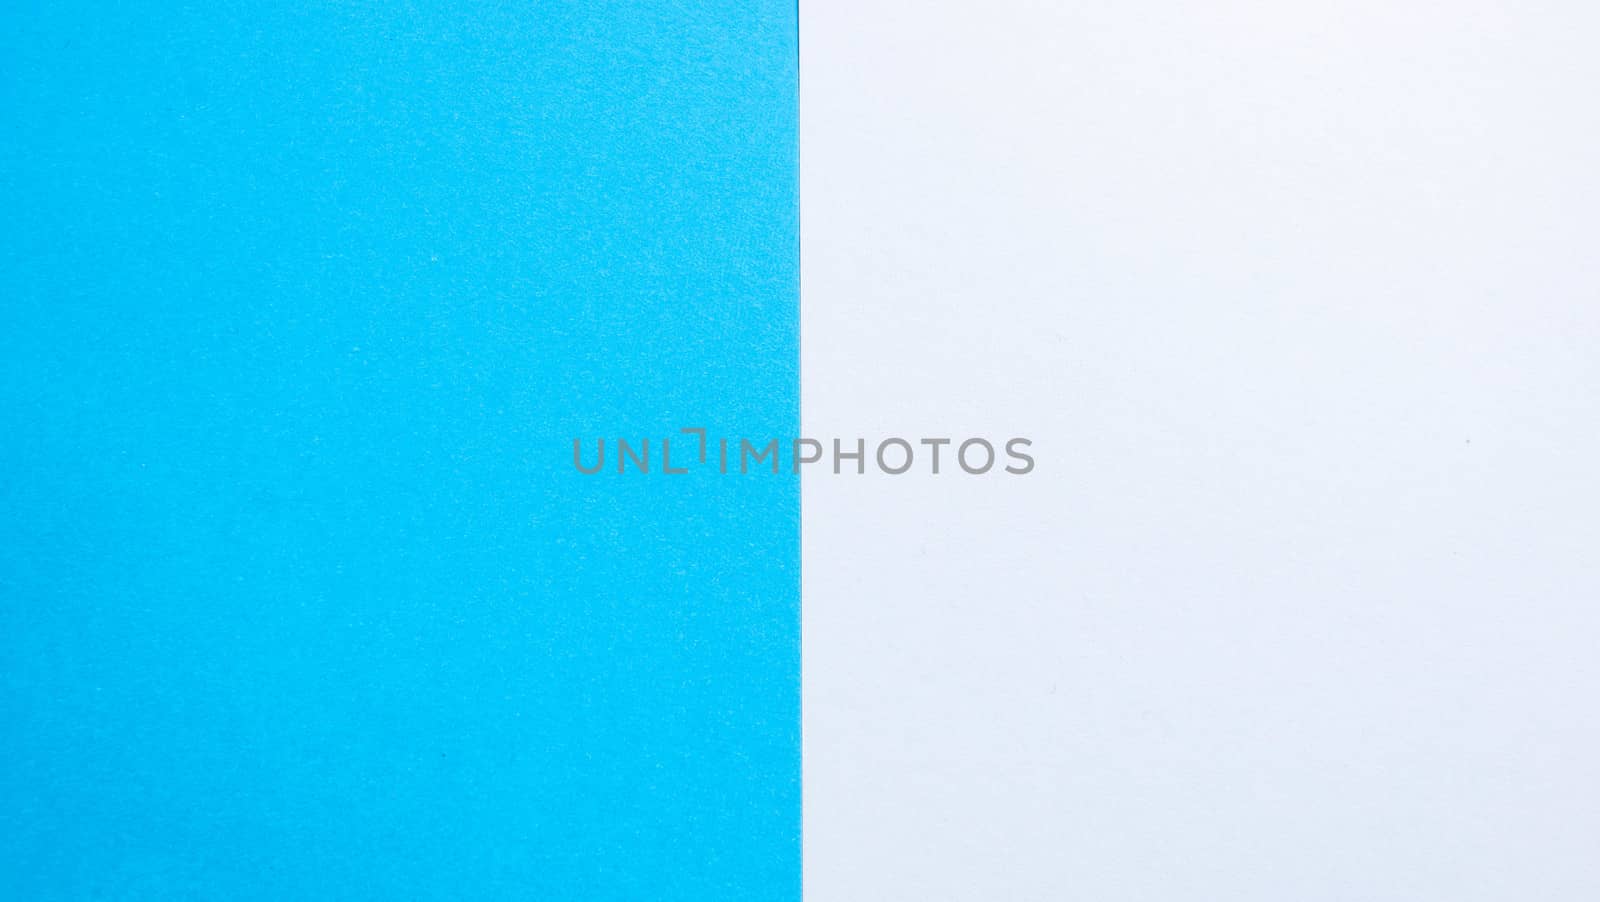 Blue-white matte suede background, close-up. Velvety texture